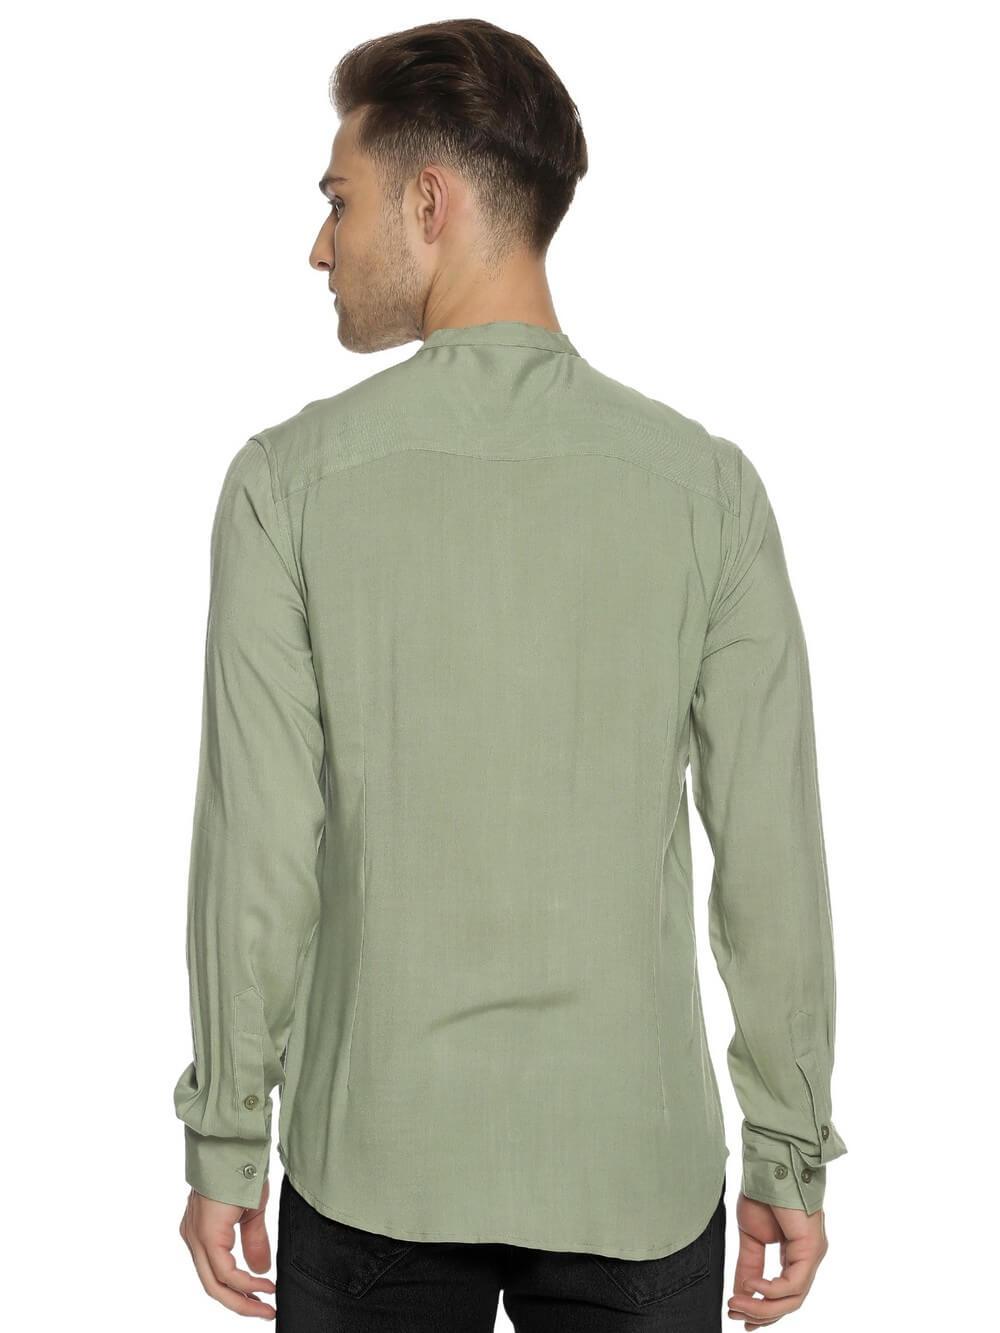 Rayon Sage Green Ultra Soft Skinny Fit Full Sleeve Shirt WeaversKnot 